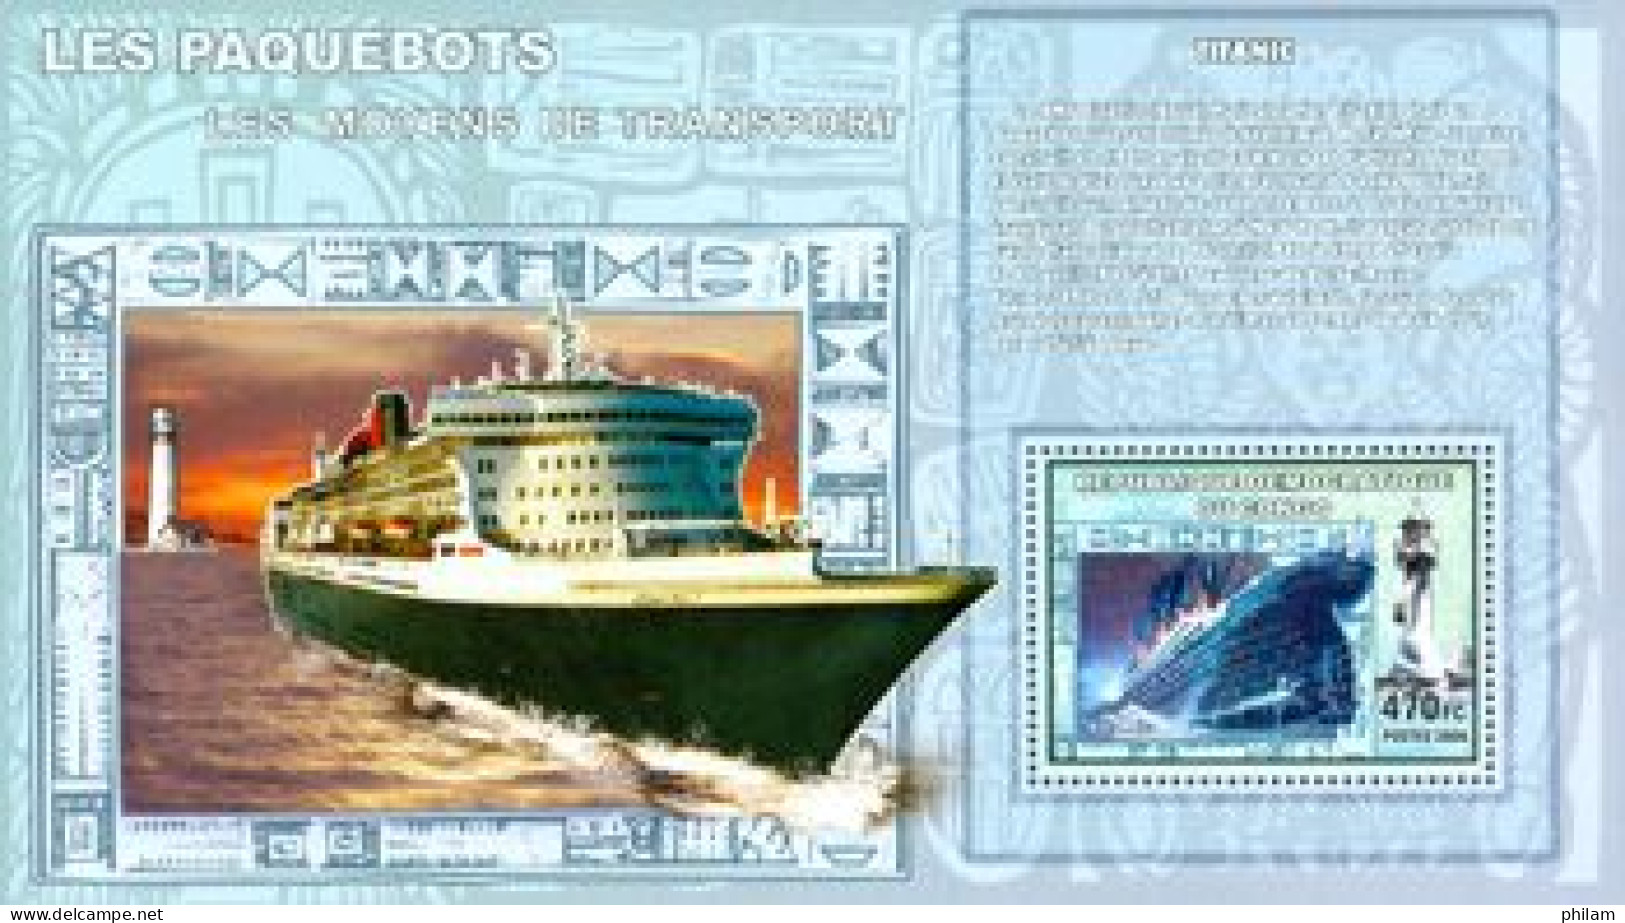 CONGO KINSHASA 2006 - Paquebots Et Phares -  Titanic - Bloc - Lighthouses